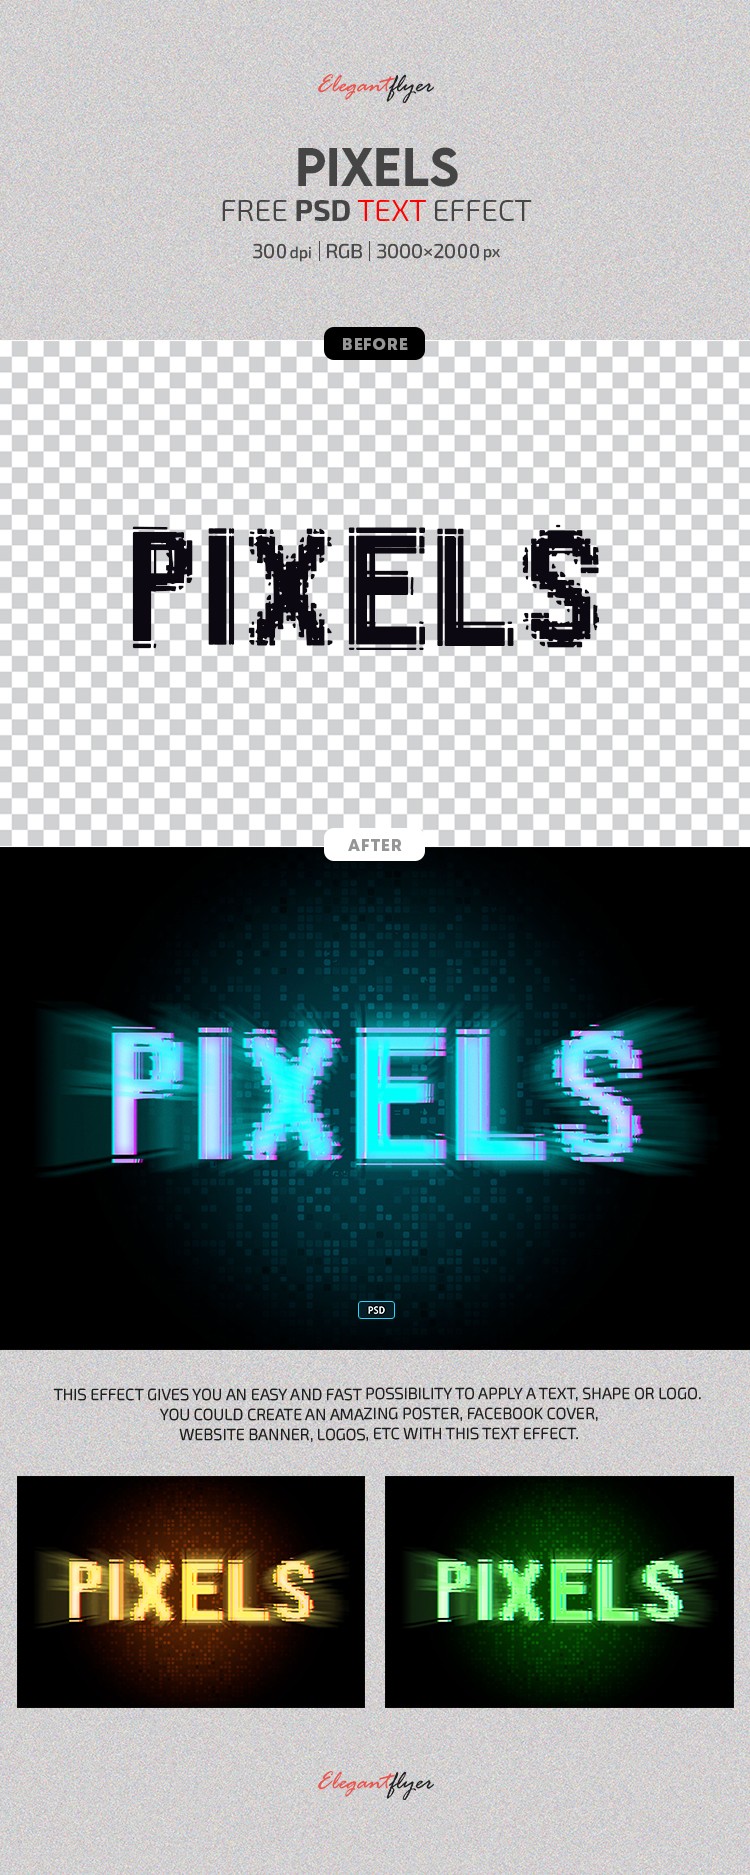 Effetto testo a pixel by ElegantFlyer